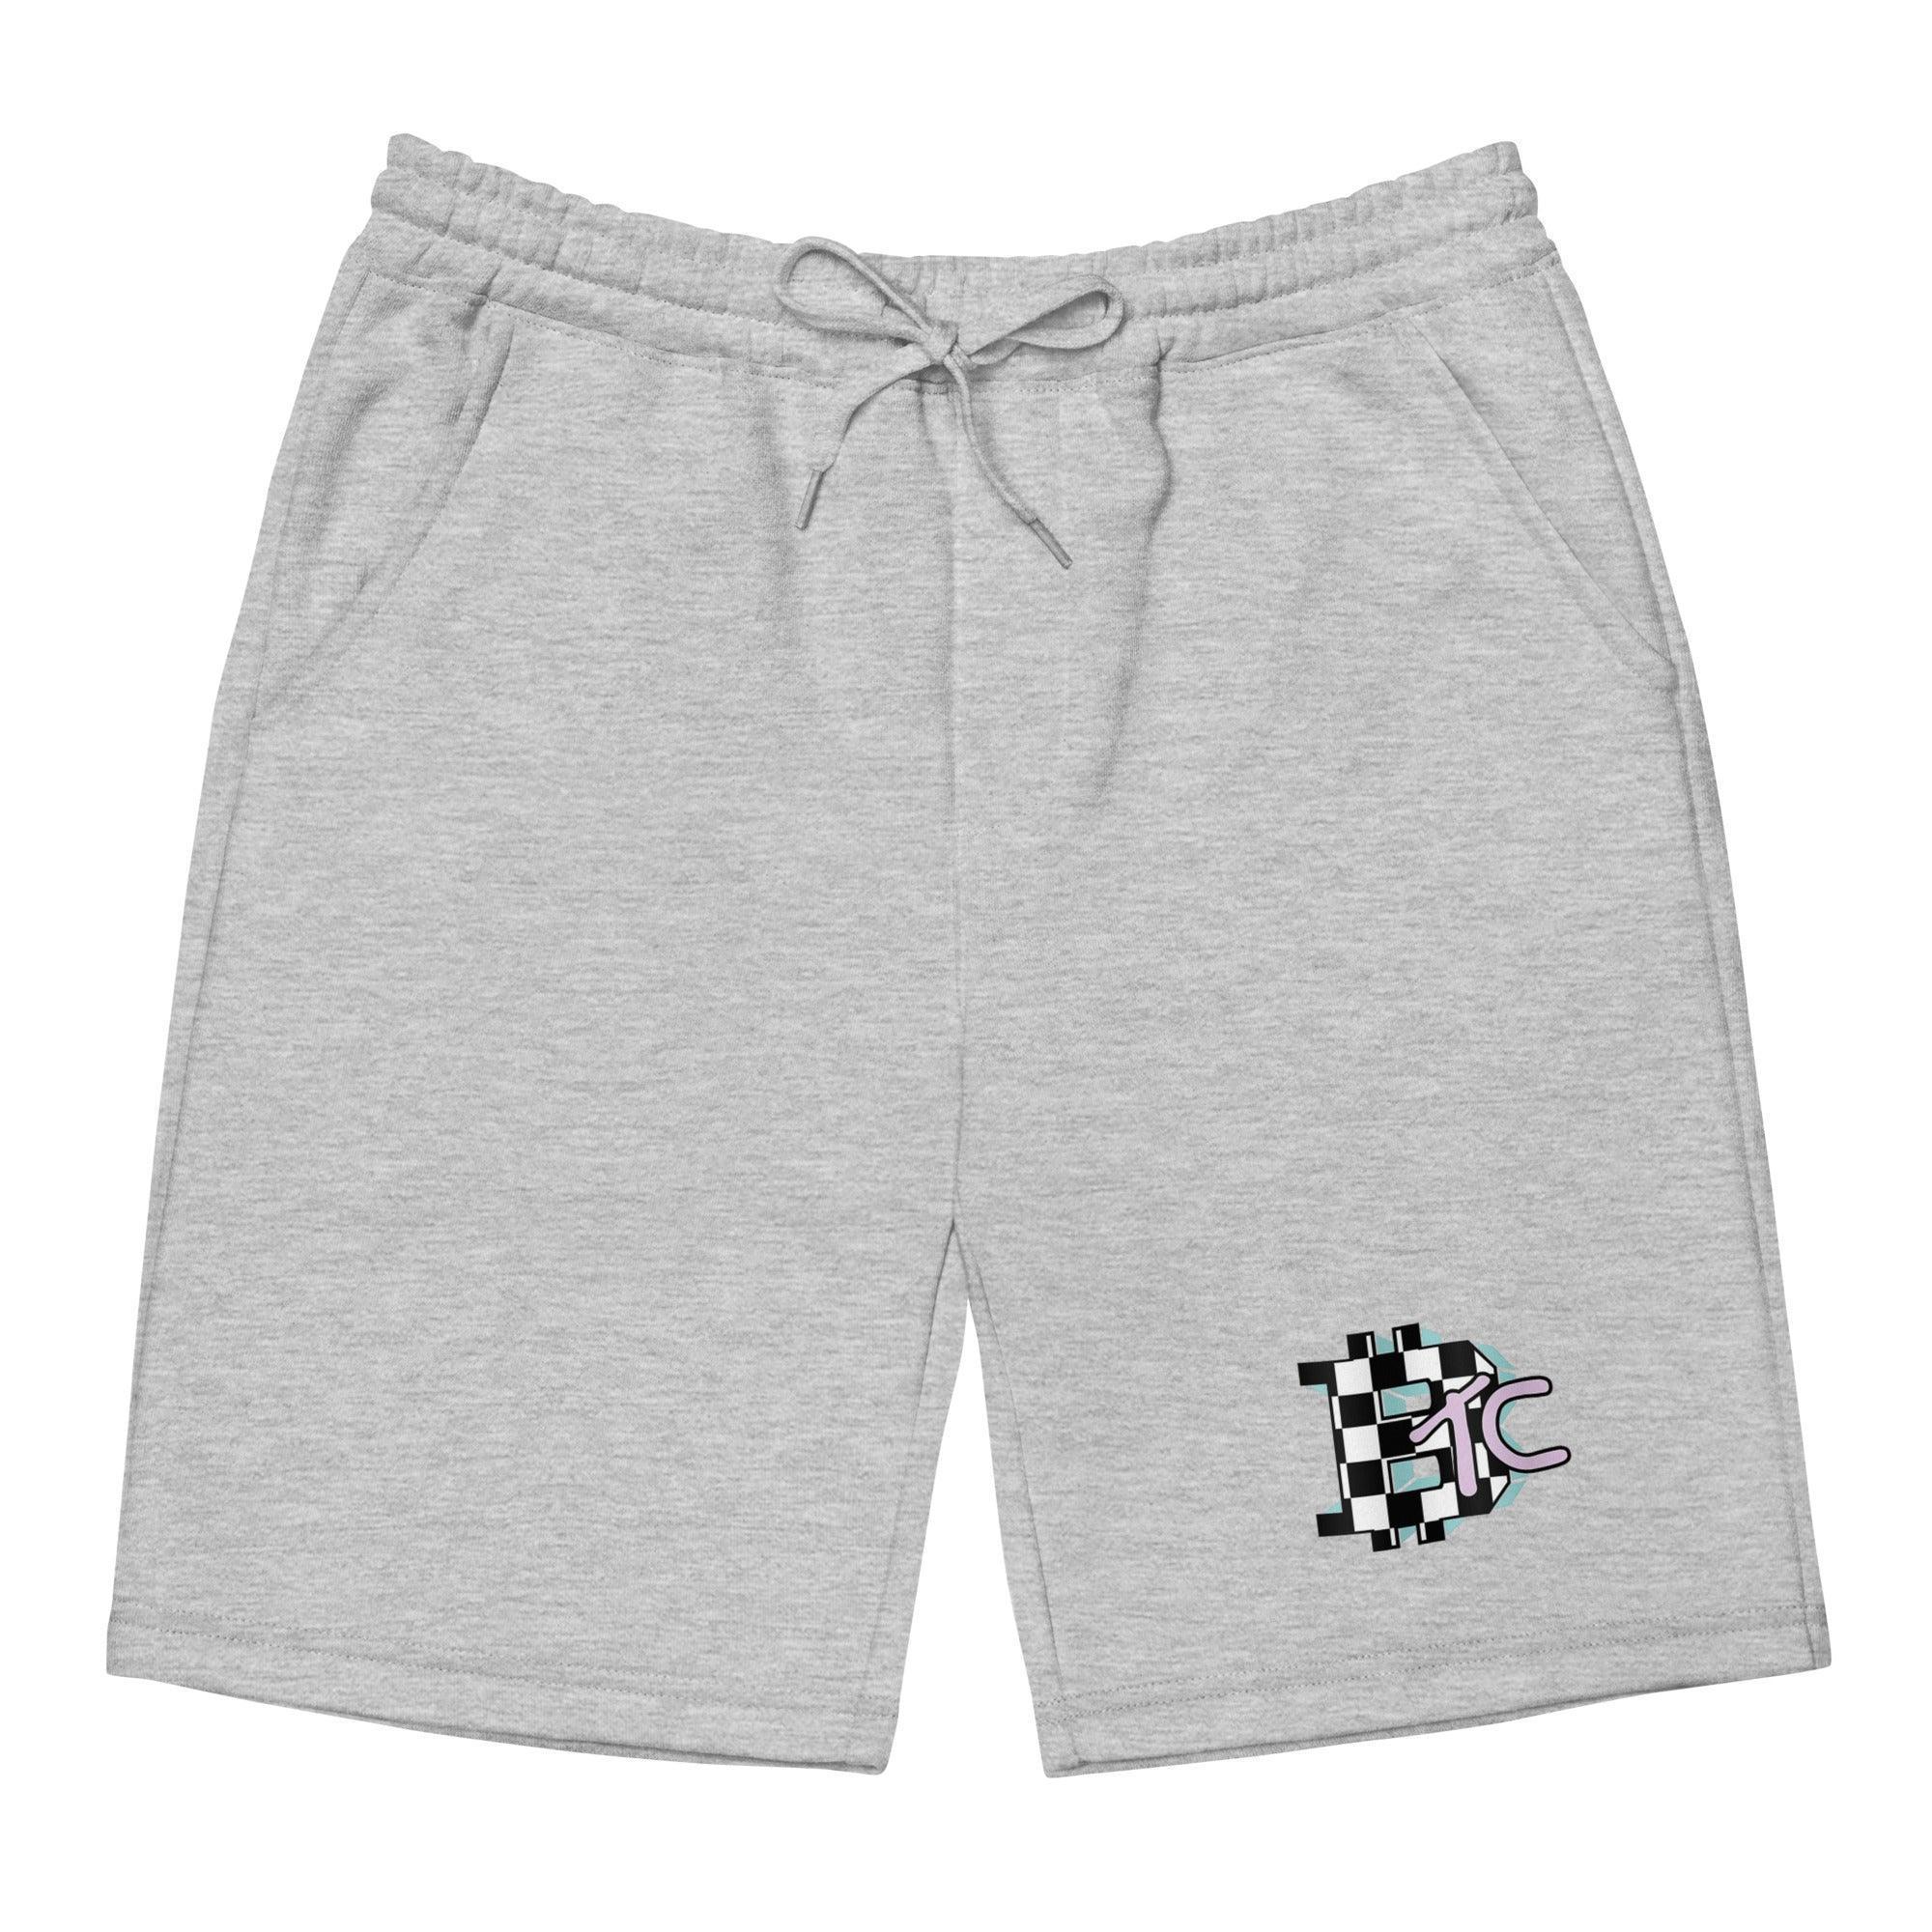 BTC Art Fleece Shorts - InvestmenTees